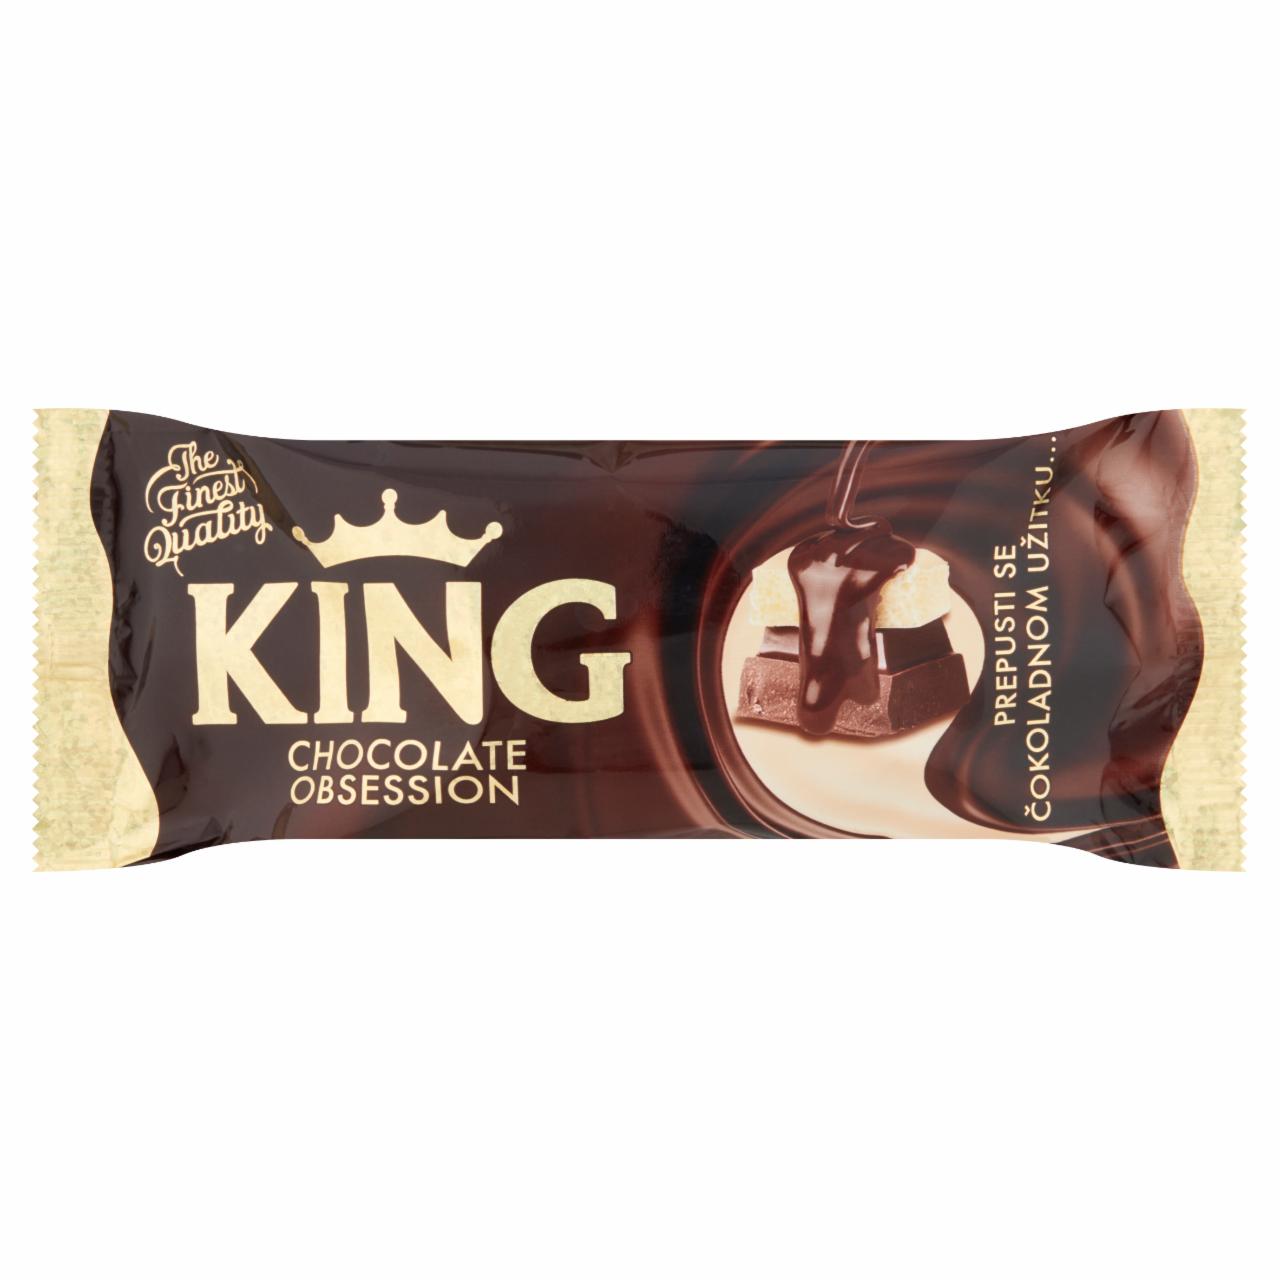 Képek - King Chocolate Obsession fehér csokoládé és csokoládé jégkrém csokoládé ízű öntettel 110 ml